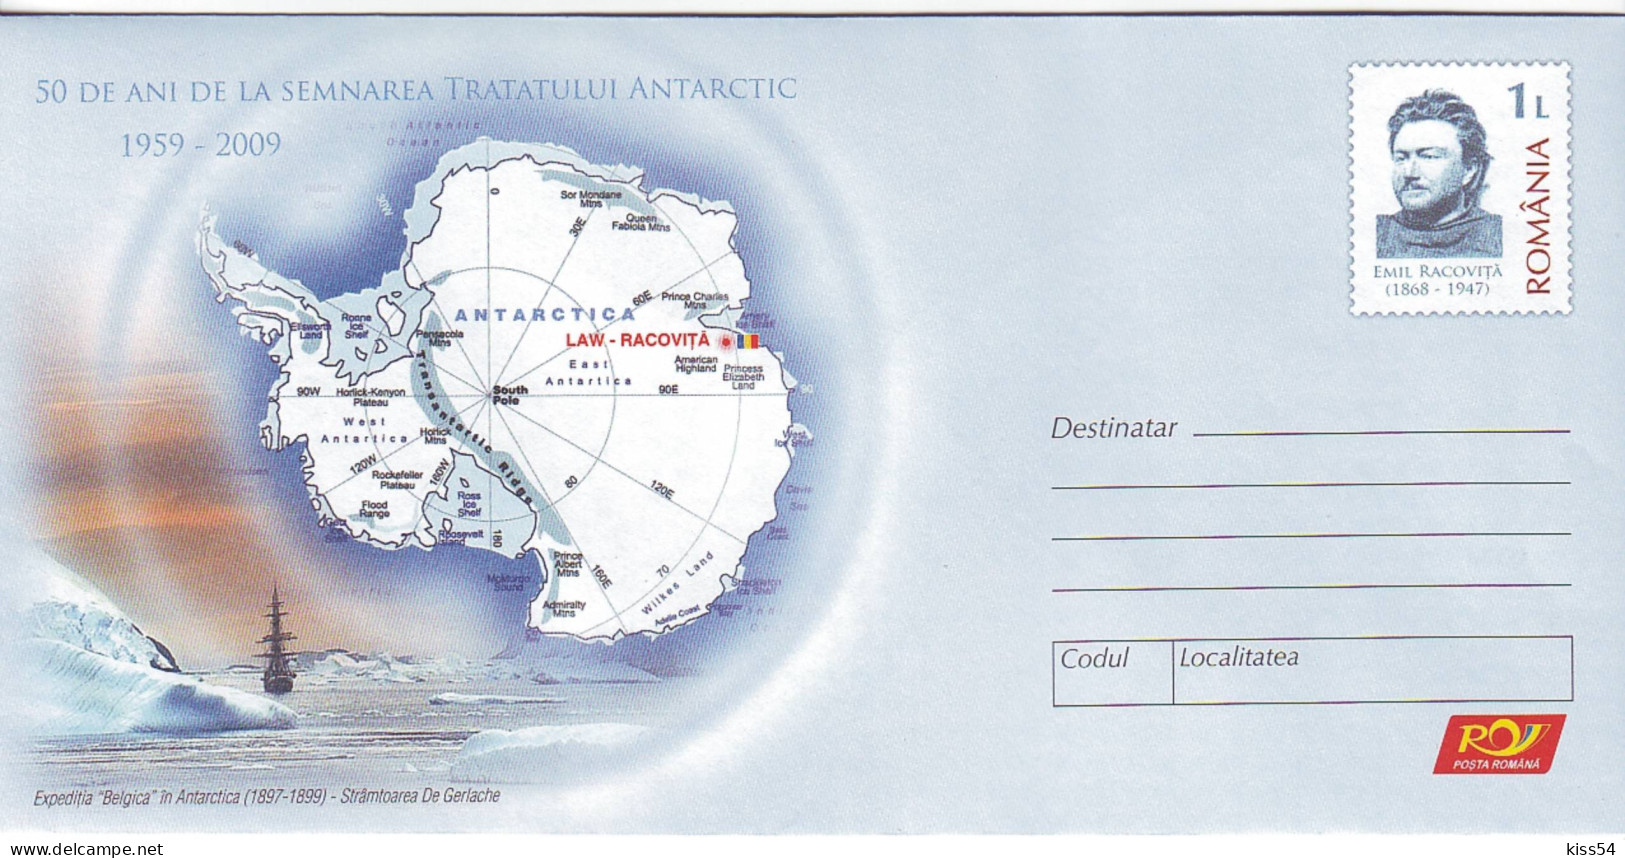 IP 2009 - 2 Antarctic Treaty - Stationery - Unused - 2009 - Postal Stationery